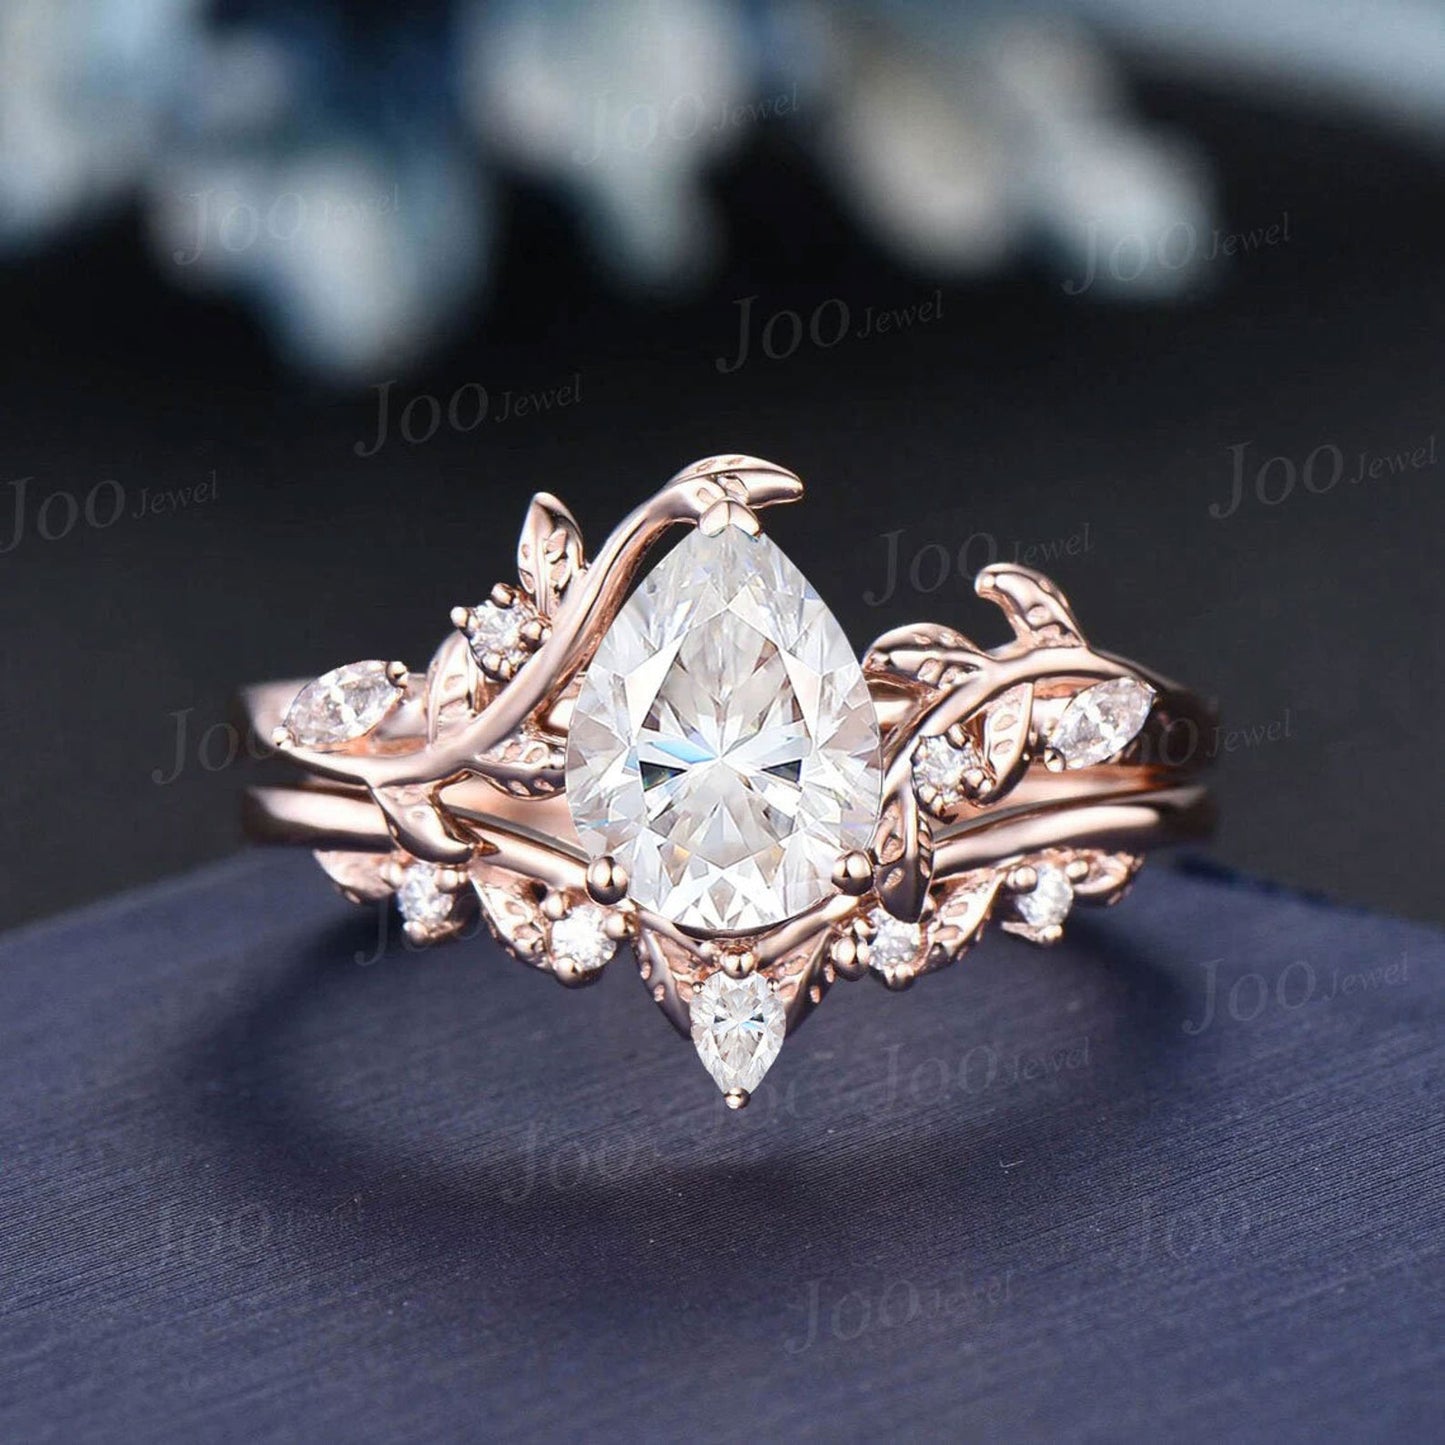 Teardrop Moissanite Diamond Wedding Ring Black Gold Band Leaf Vine Branch Bridal Set 1.25ct Pear Moissanite Bypass Wedding Ring for Women